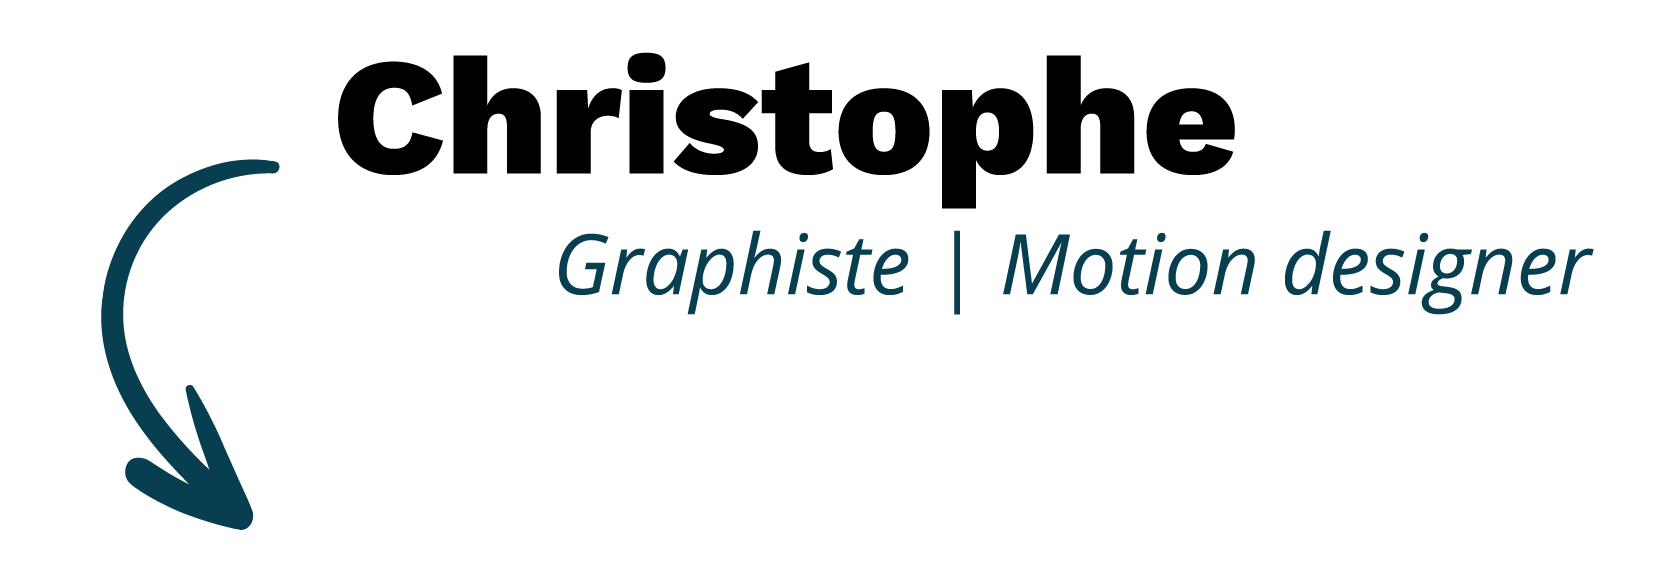 Graphiste | Motion designer 